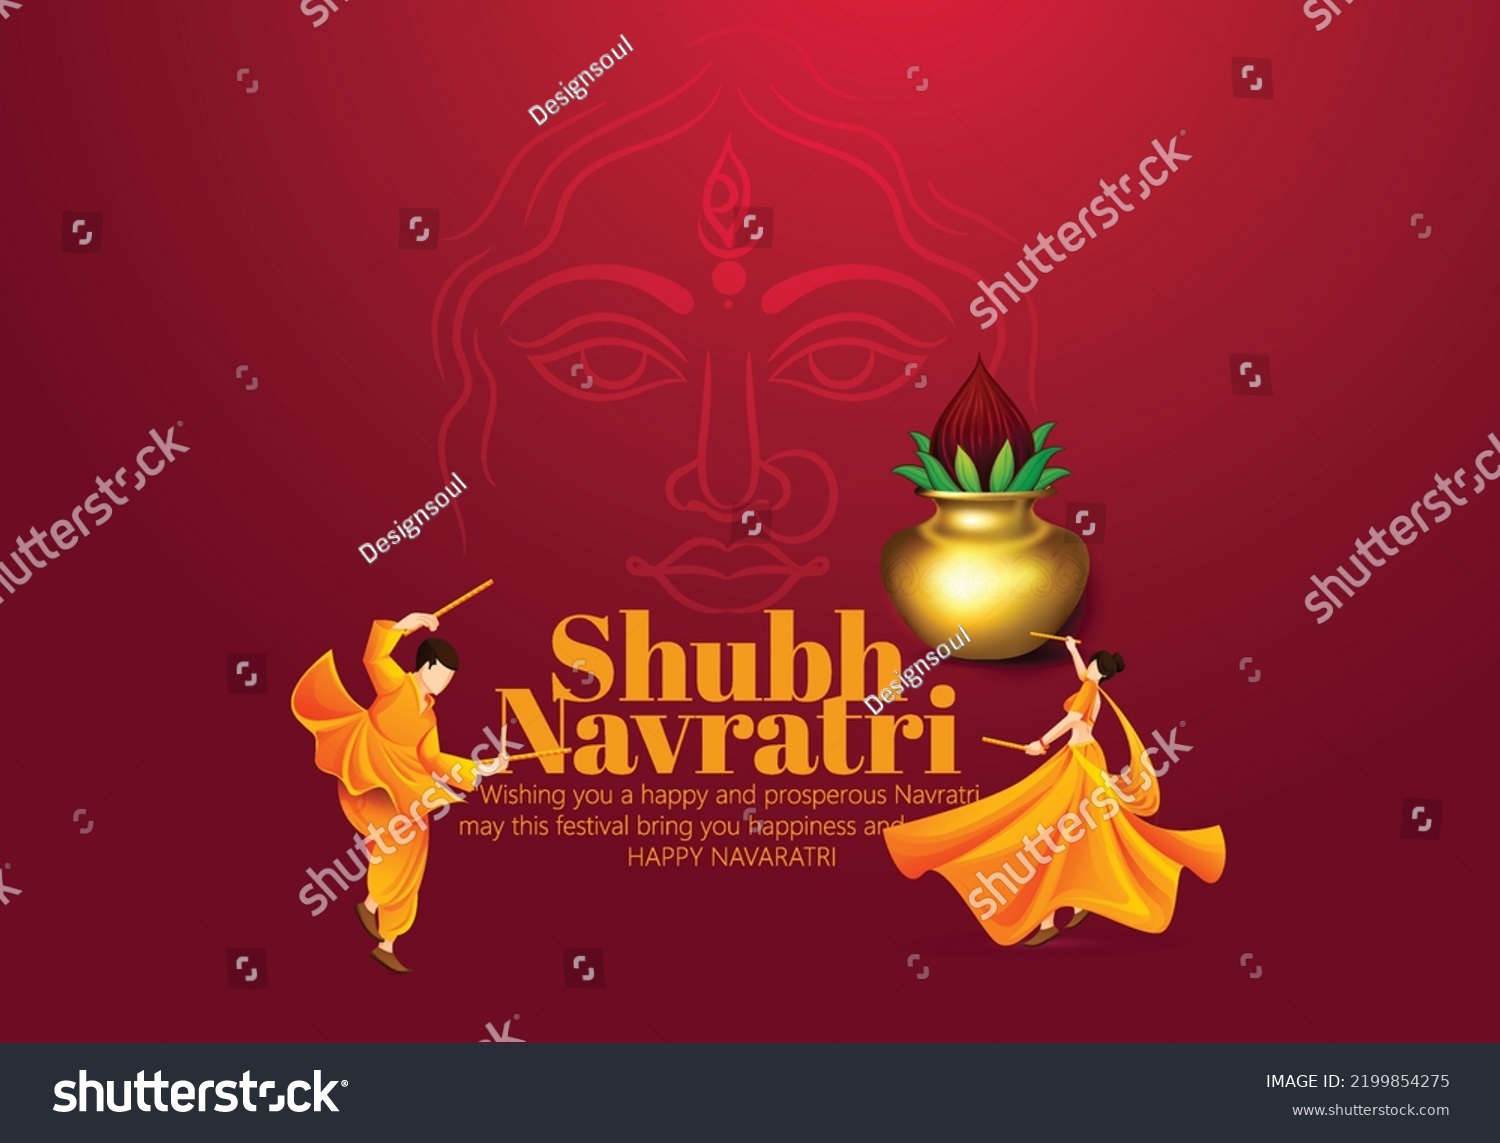 SVG of Illustration of Goddess Durga for Shubh Navratri, Couple Playing Garba or Dandiya in Navratri Celebration svg